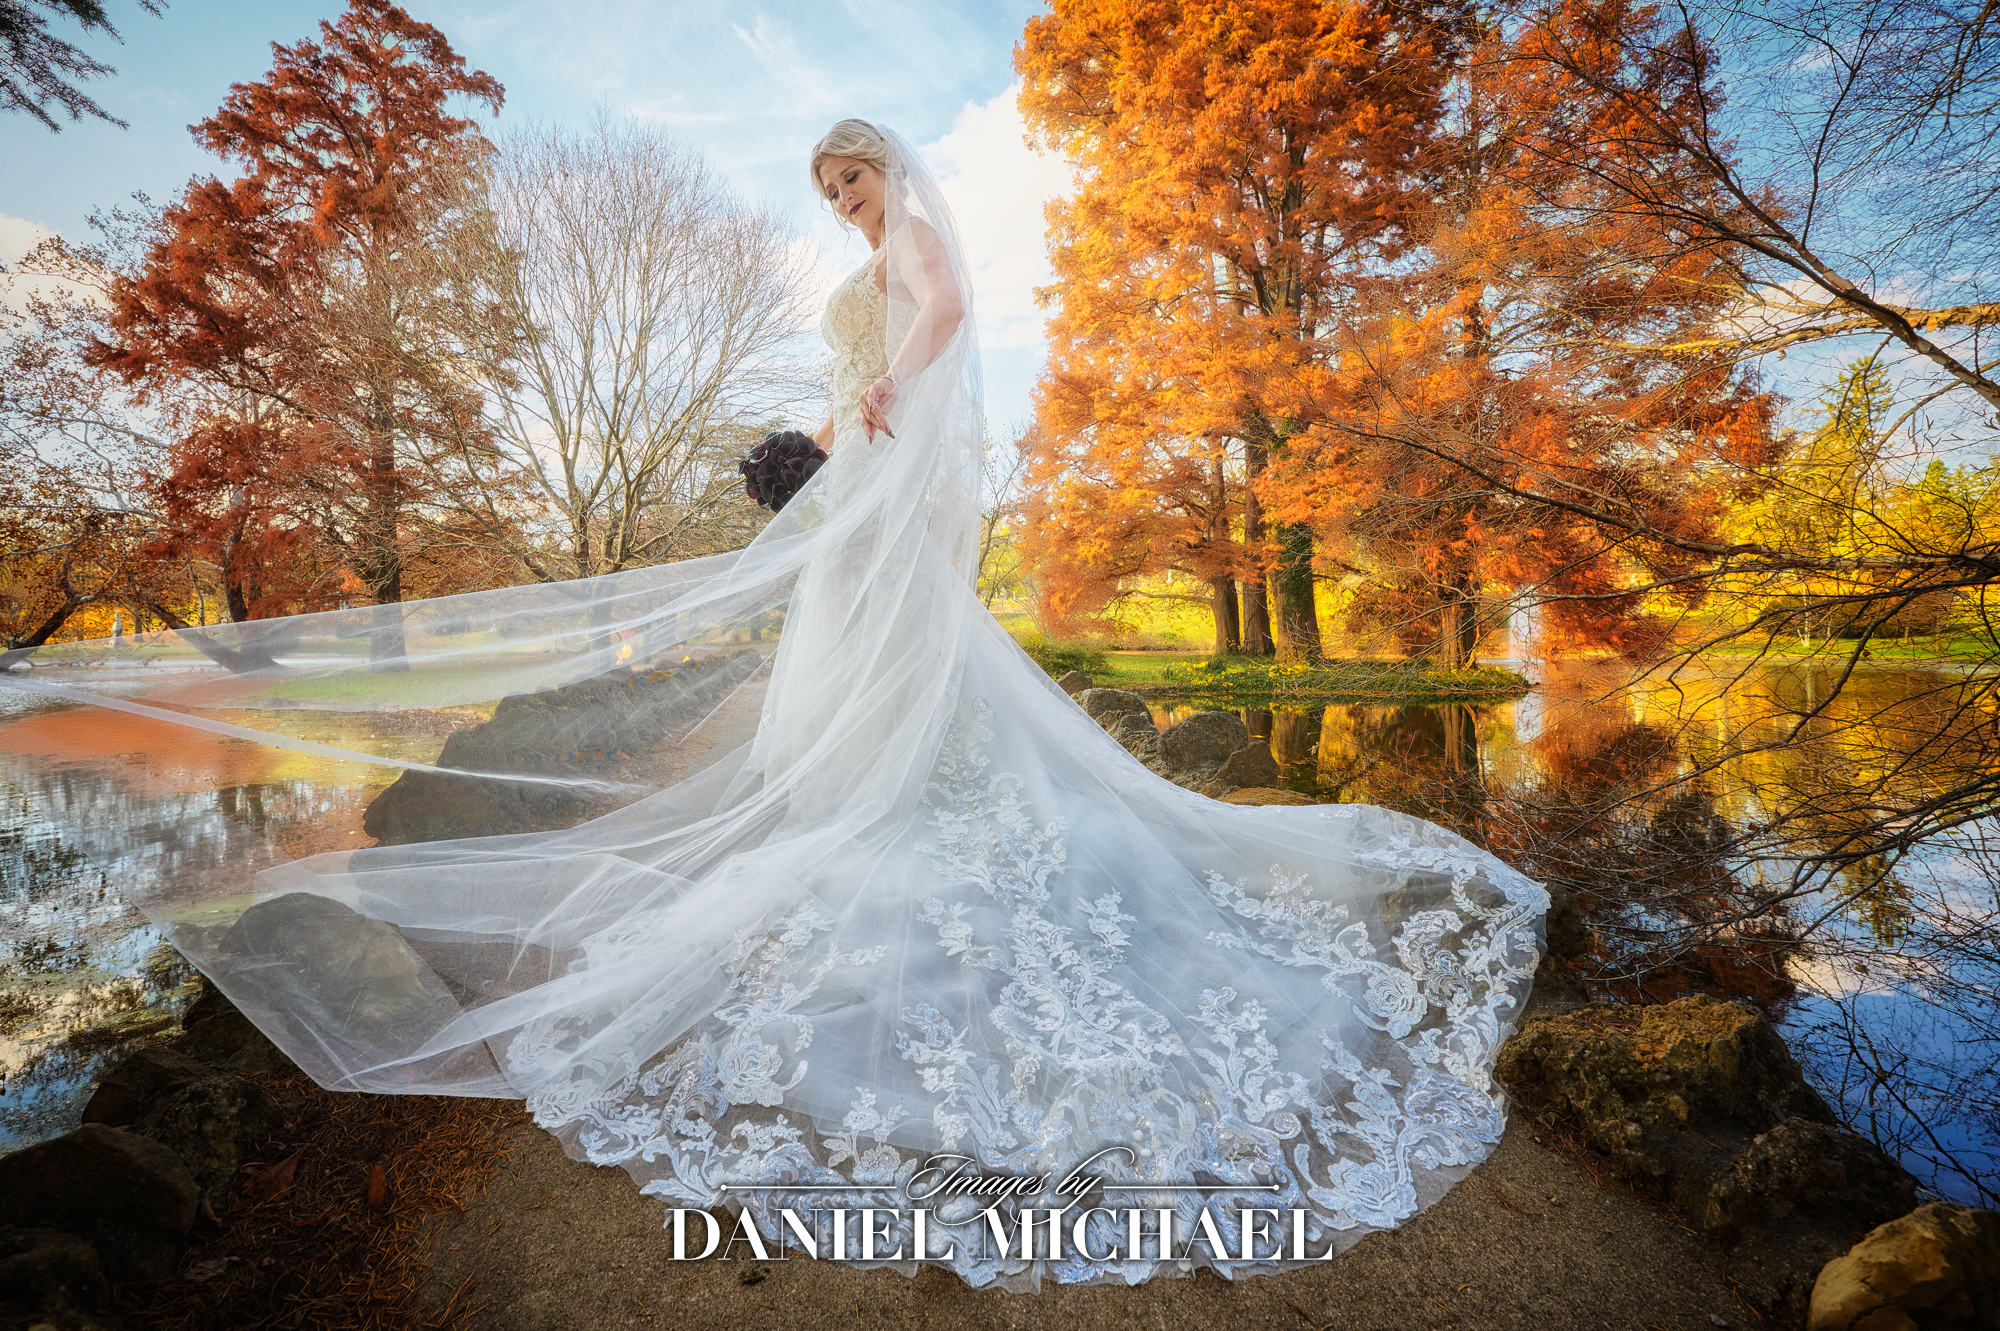 Cincinnati's top wedding photographer captures bride in flowing dress with vivid fall backdrop